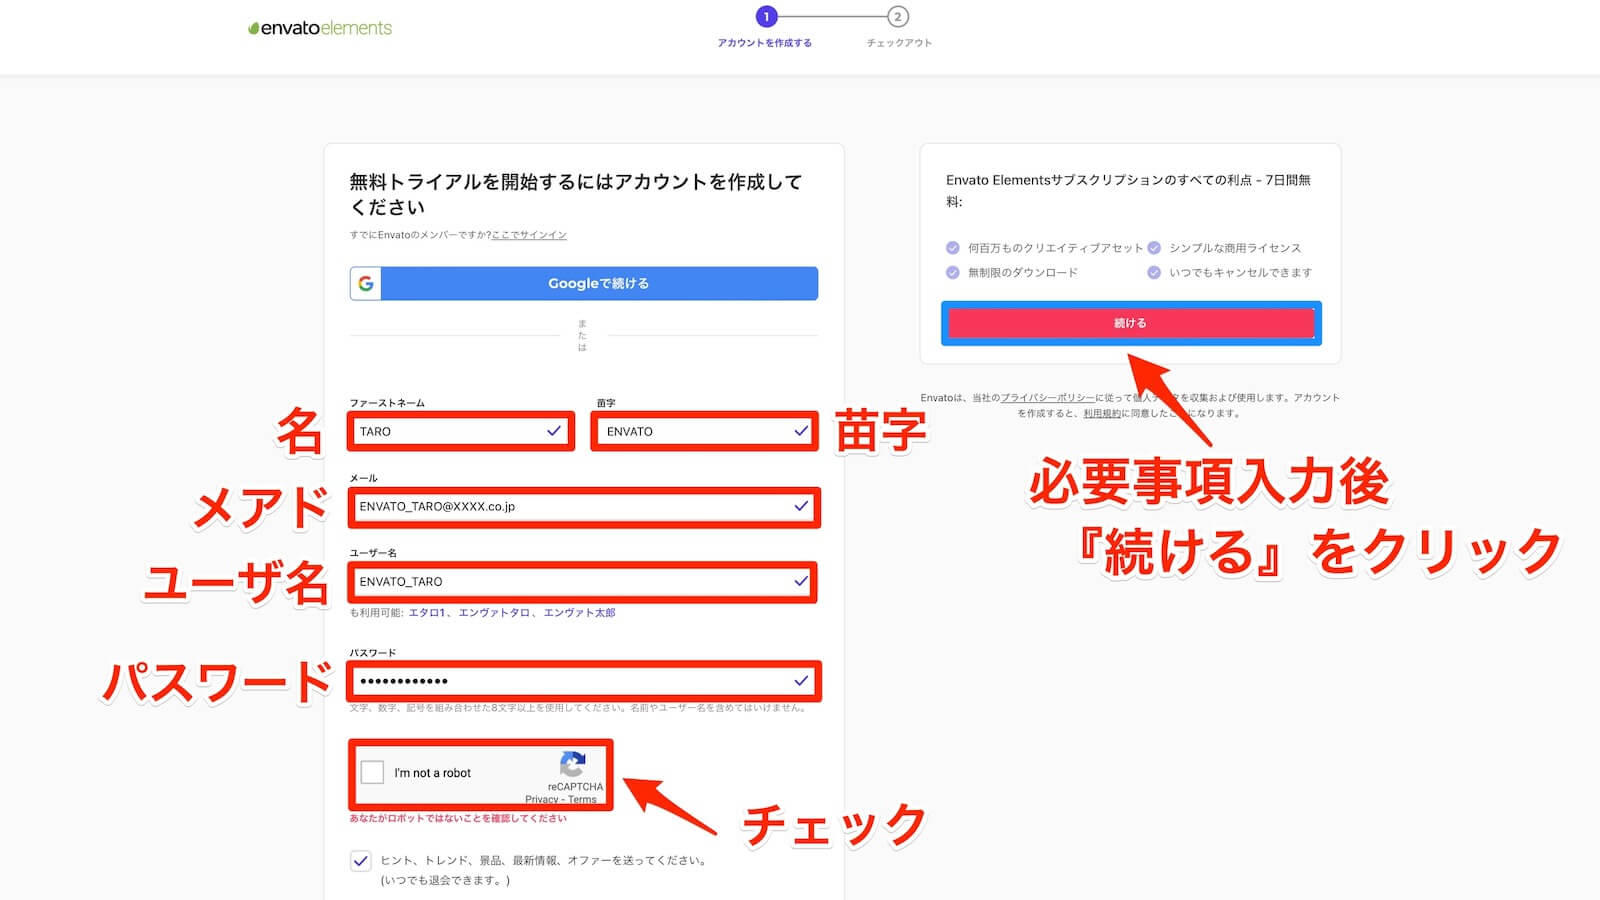 Screenshot of envato account information registration screen